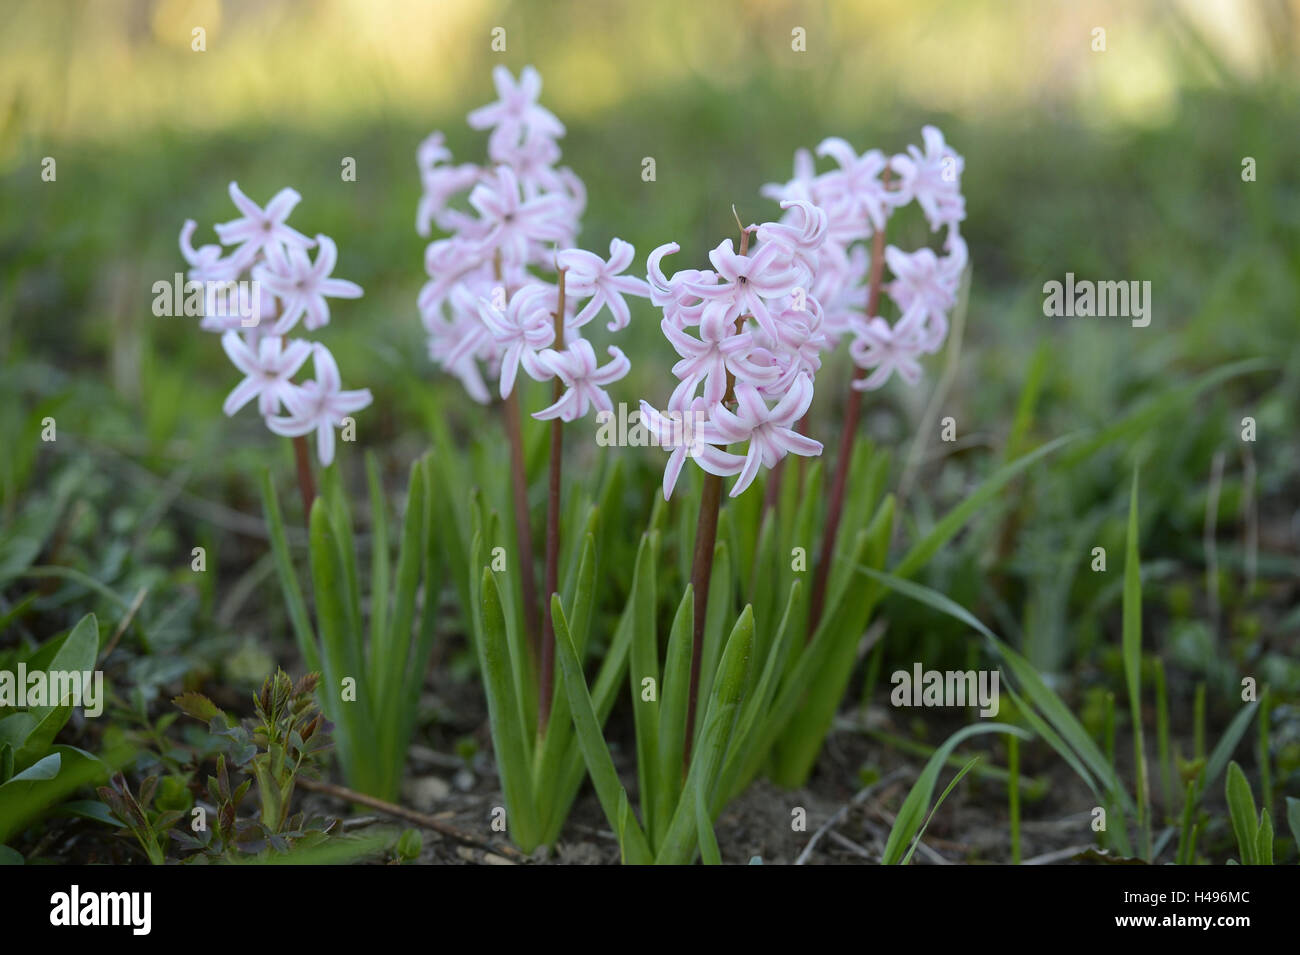 Garden hyacinth, Hyacinthus orientalis, Stock Photo